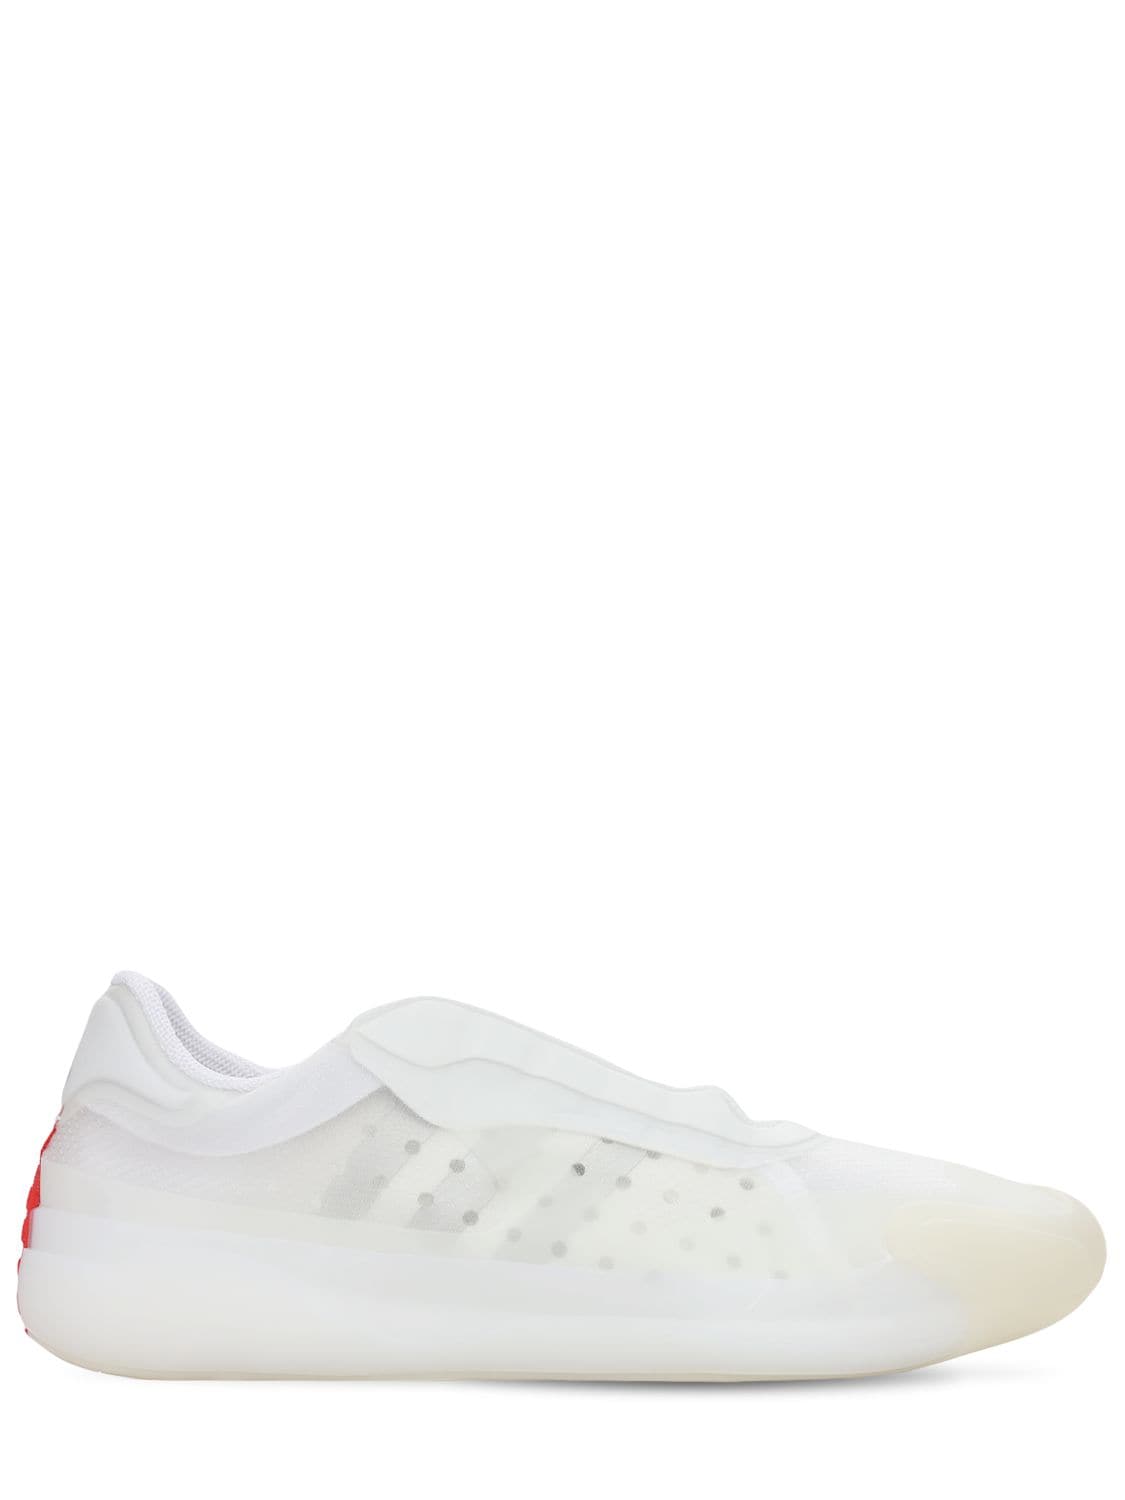 Adidas X Prada “prada Sailing Luna Rossa”运动鞋 In White